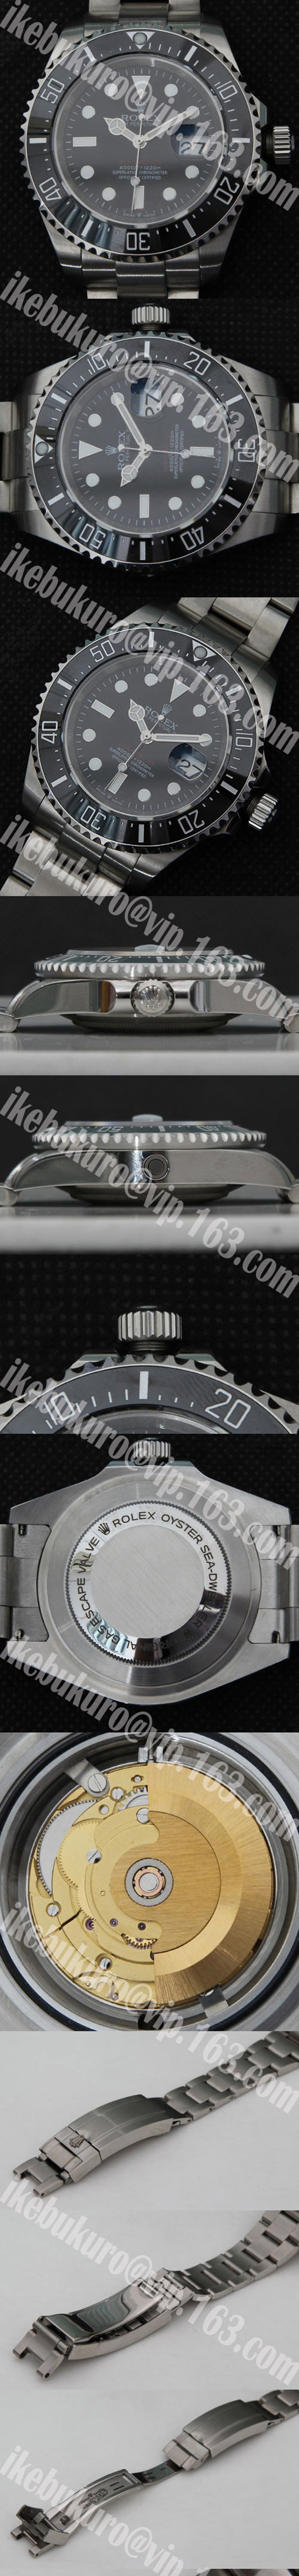 Rolex激安腕時計 シードゥエラーコピー時計Ref.126600 【シルバーホワイト 】